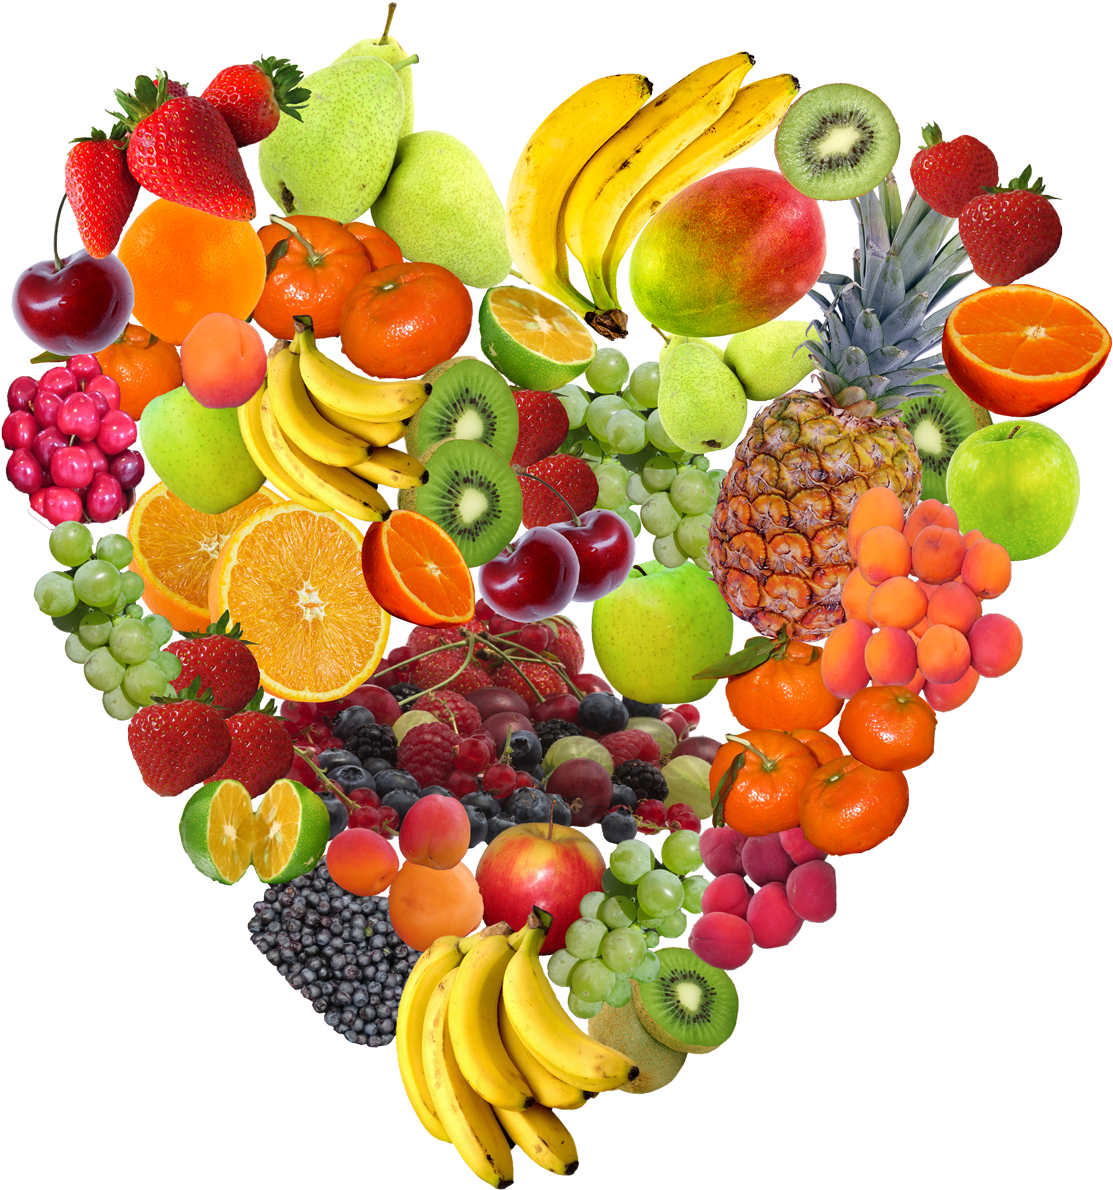 A Heart Shaped Arrangement Of Different Fruits